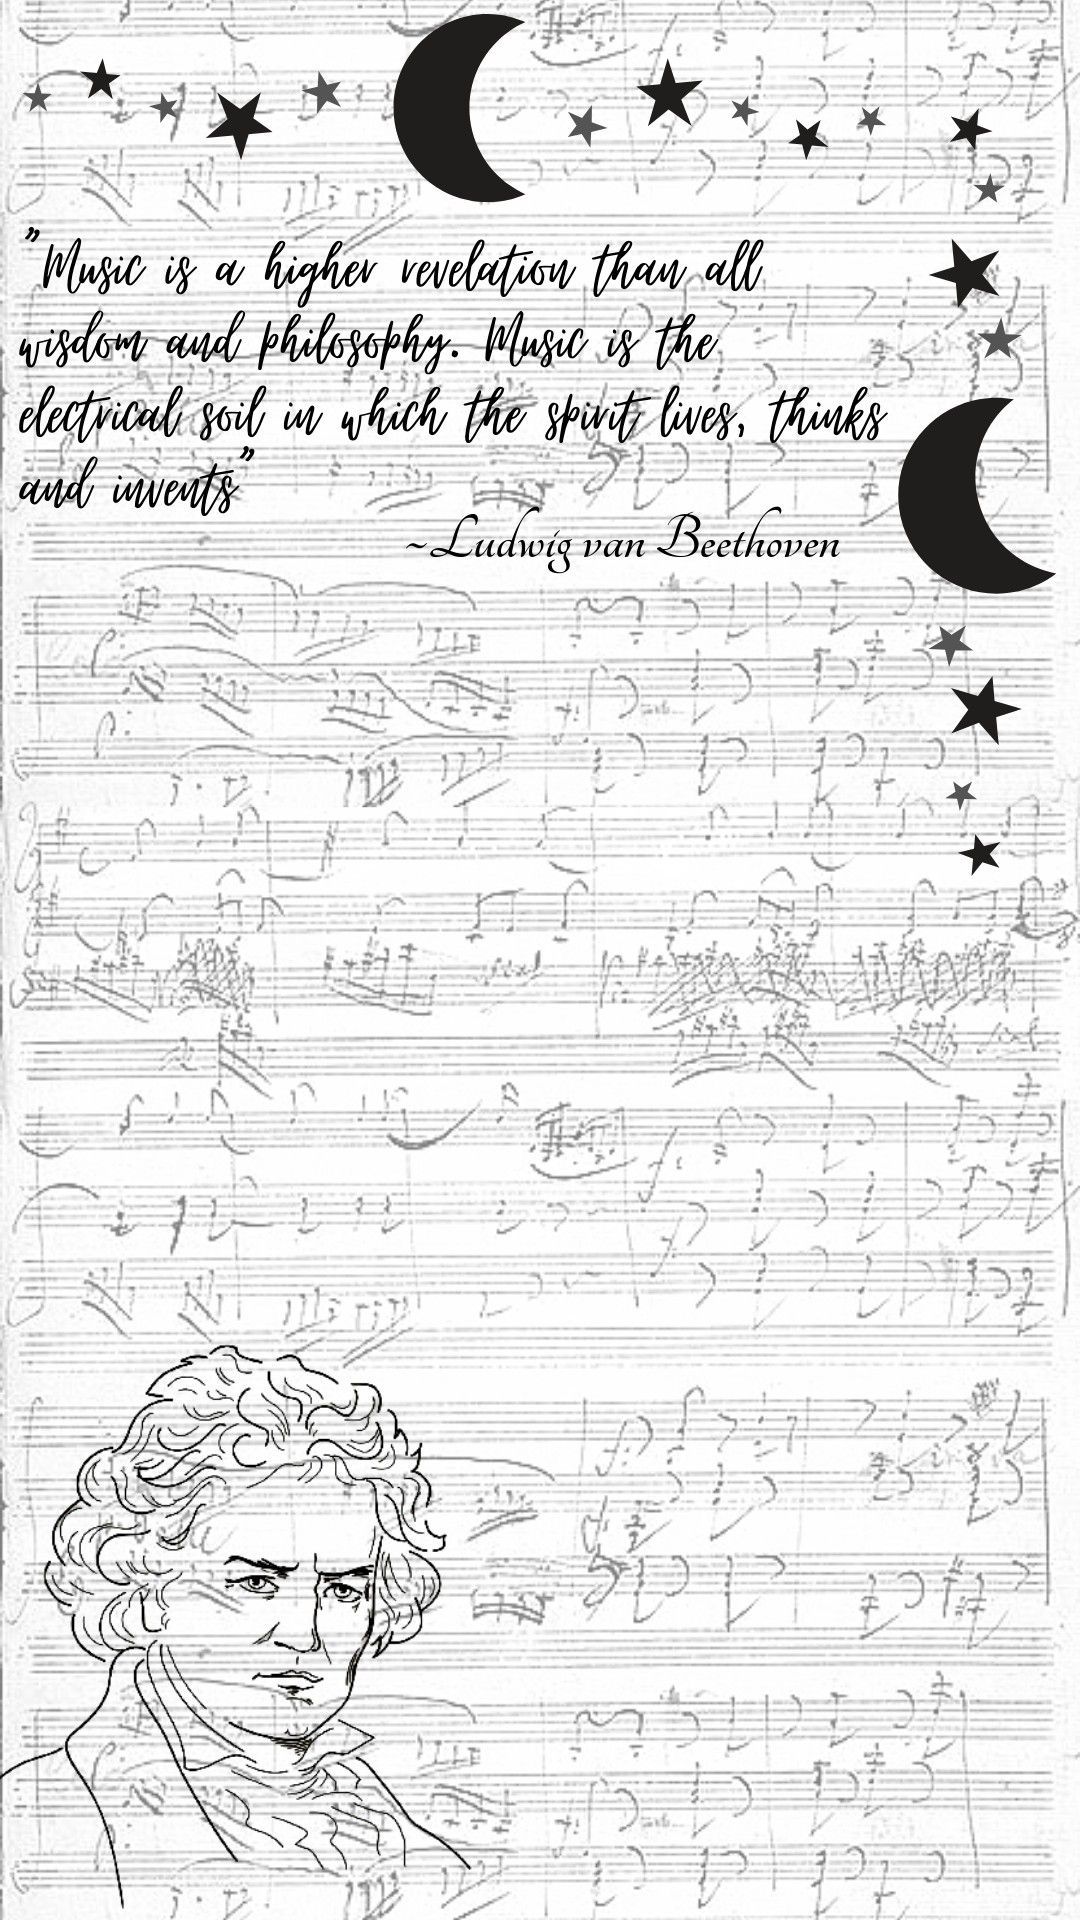  Ludwig Van Beethoven Hintergrundbild 1080x1920. Ludwig van Beethoven, aesthetic background, wallpaper, quote, stars. Classical music composers, Vintage music posters, Music jokes